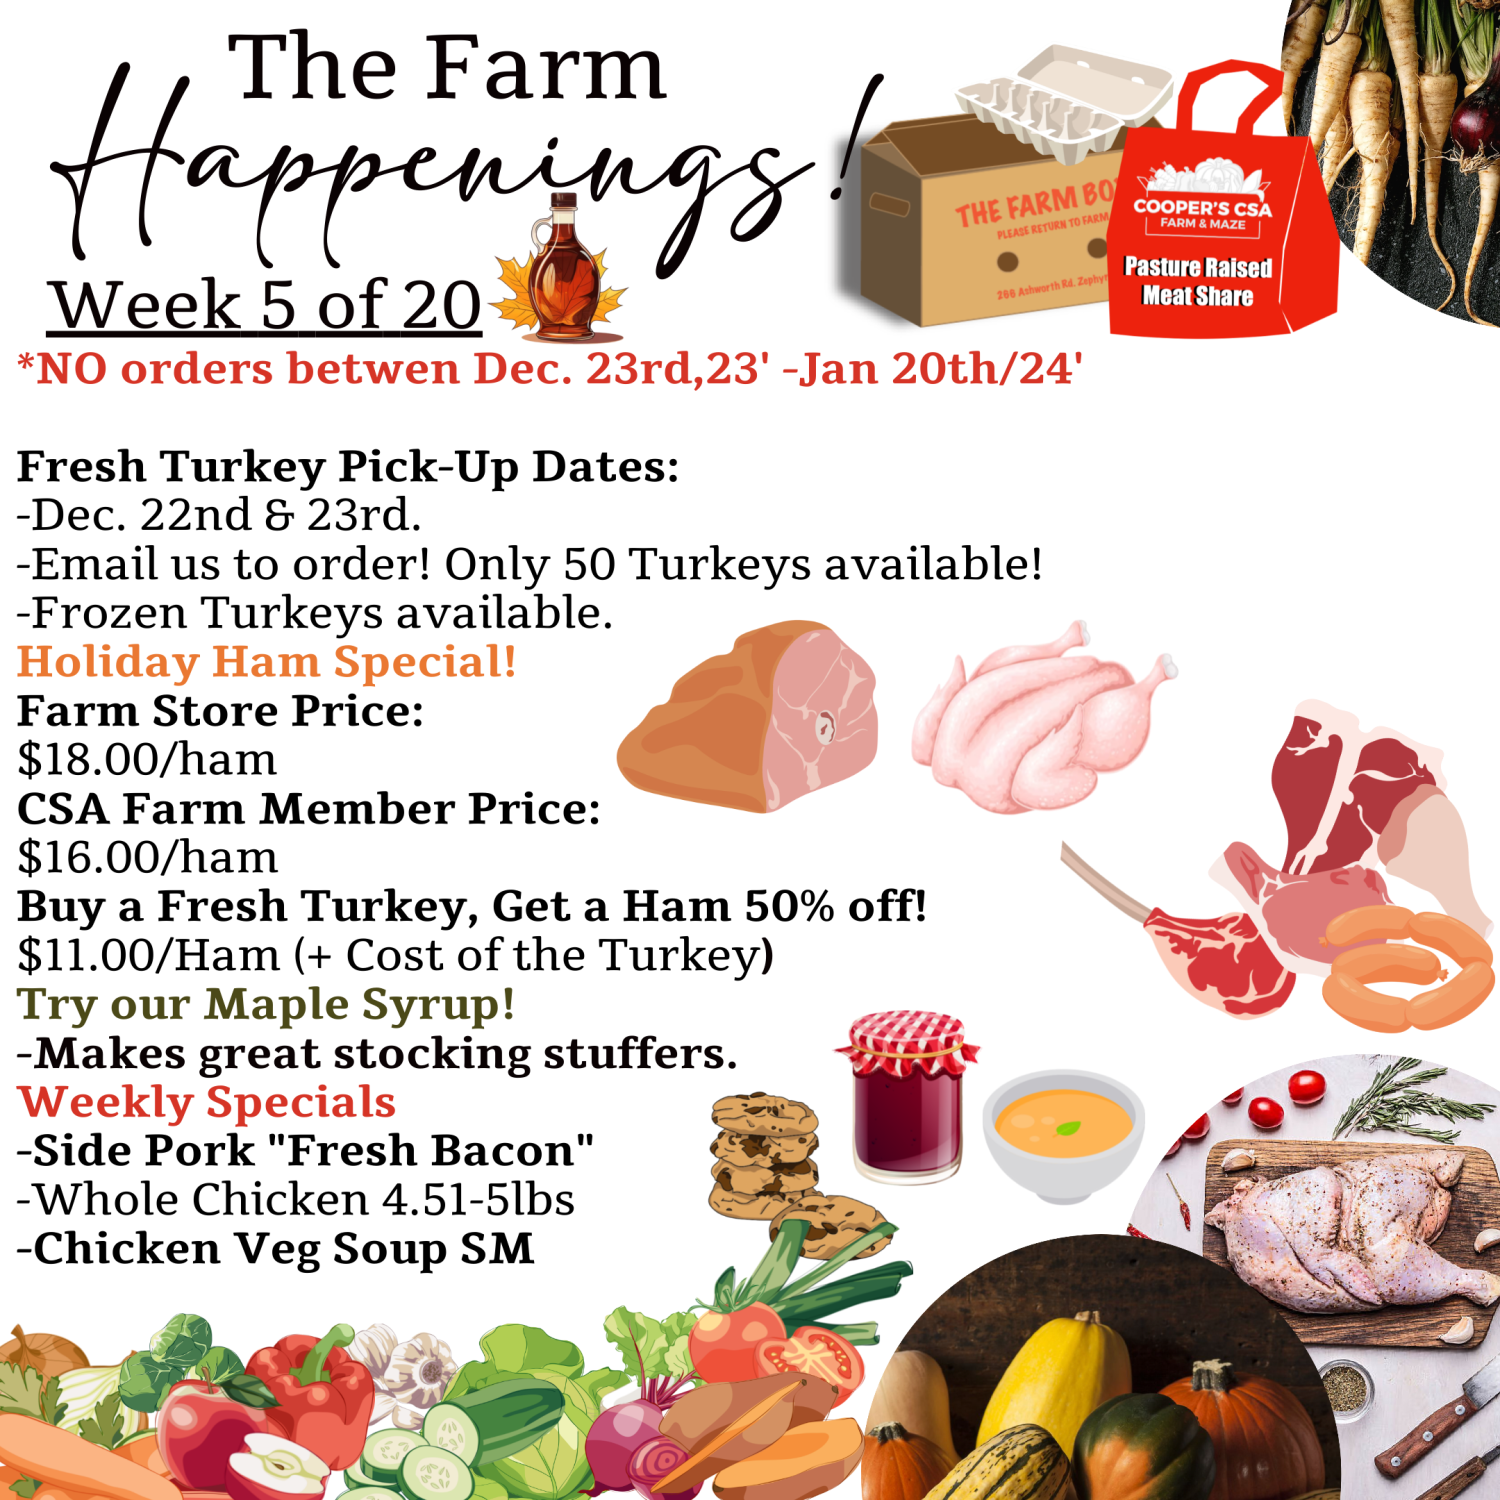 Previous Happening: "The Farm Box"-Coopers CSA Farm Farm Happenings Dec. 12-16th